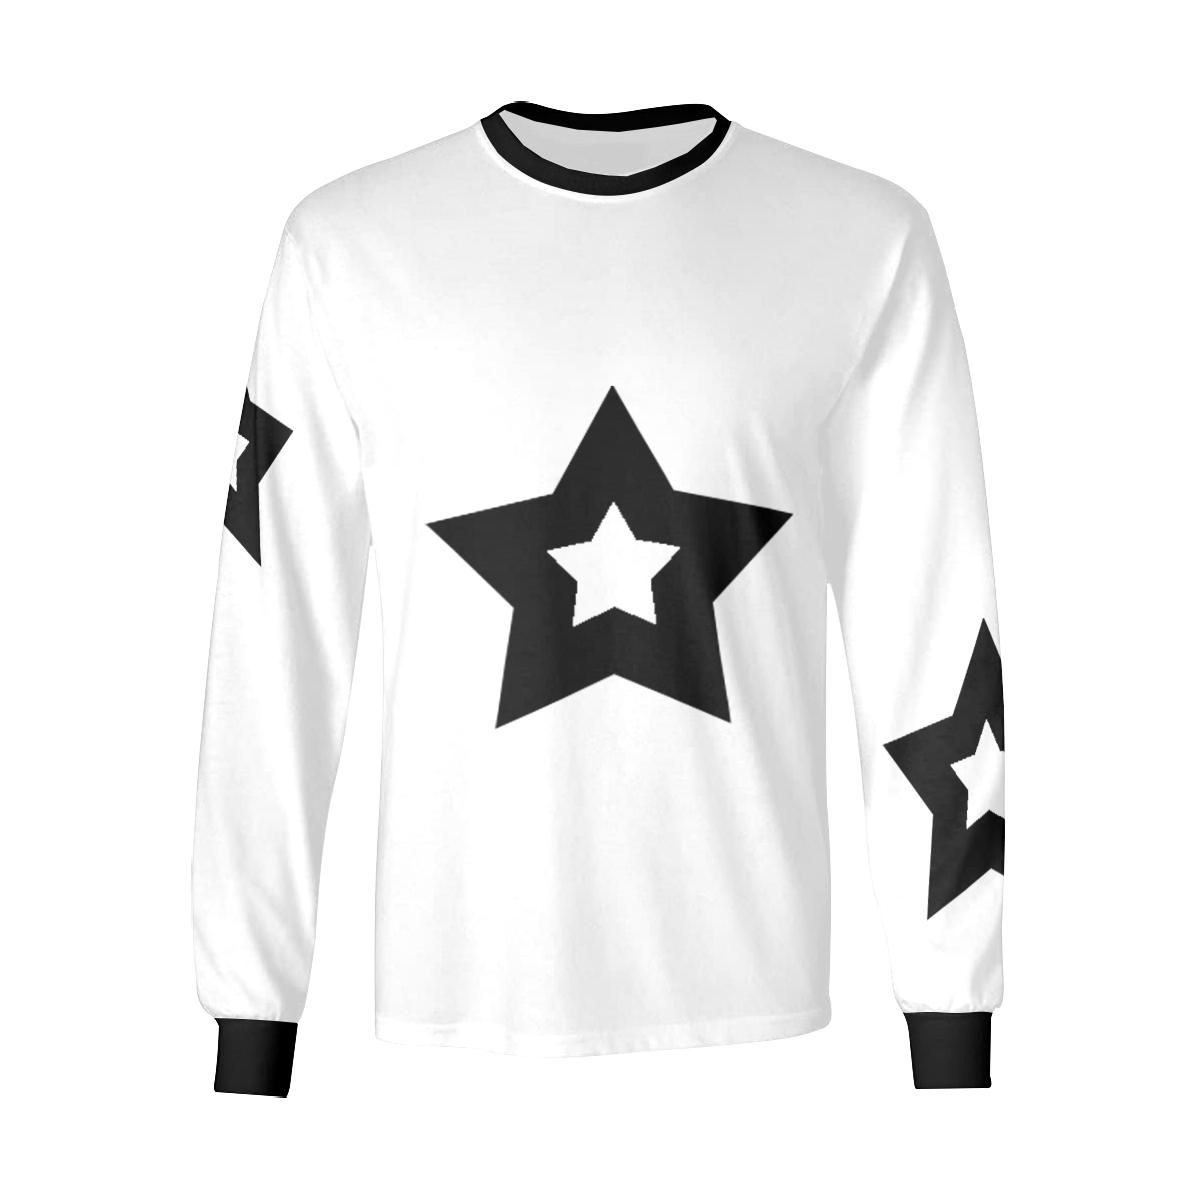 Bulky Stars. long sleeve T-shirt by interestprint - East Hills Casuals